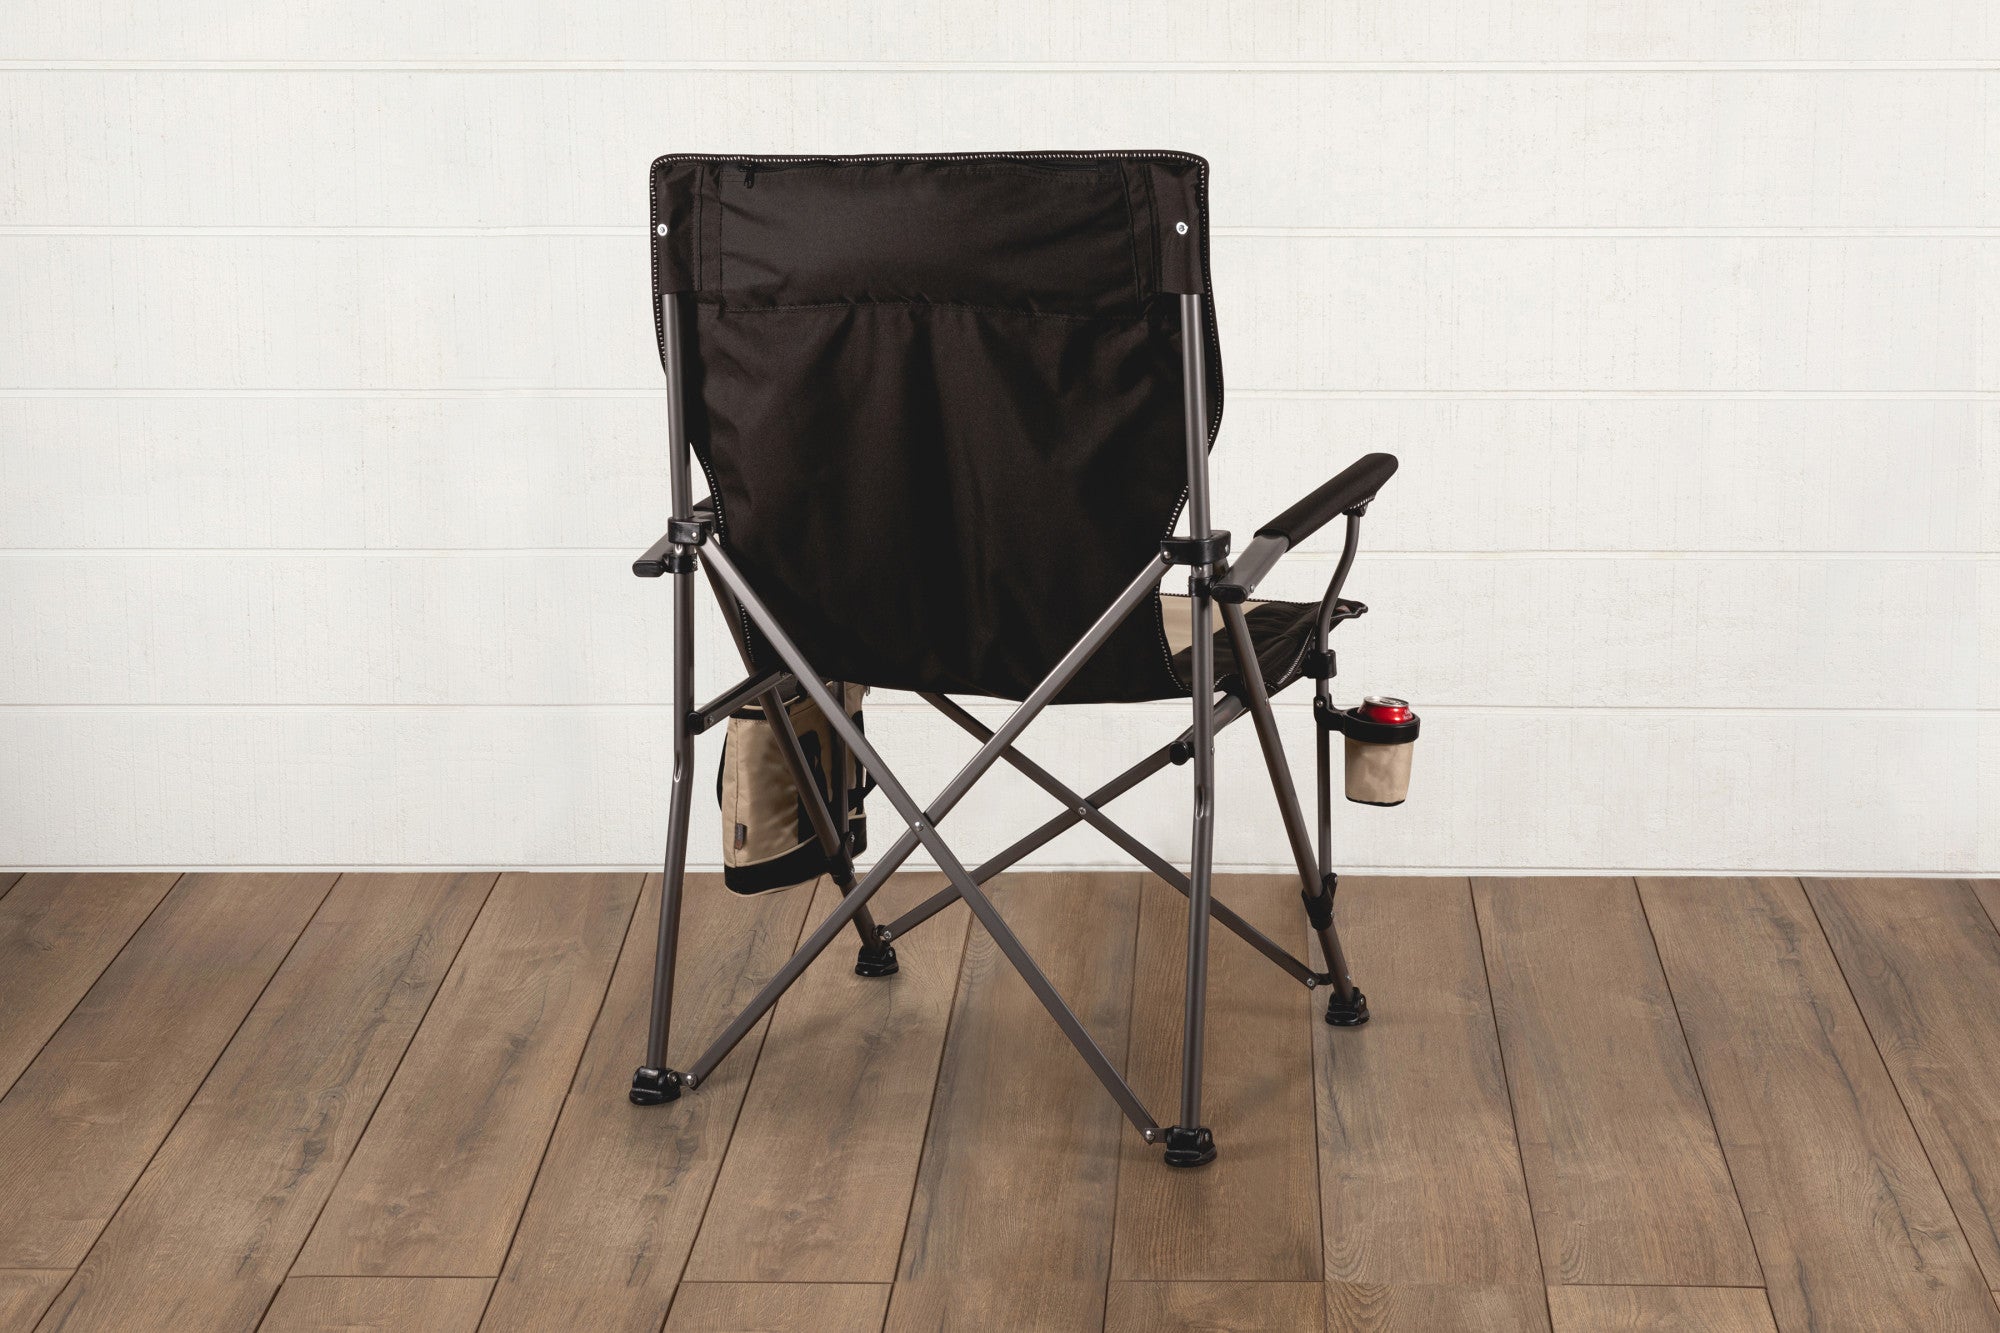 Cal Bears - Big Bear XXL Camping Chair with Cooler